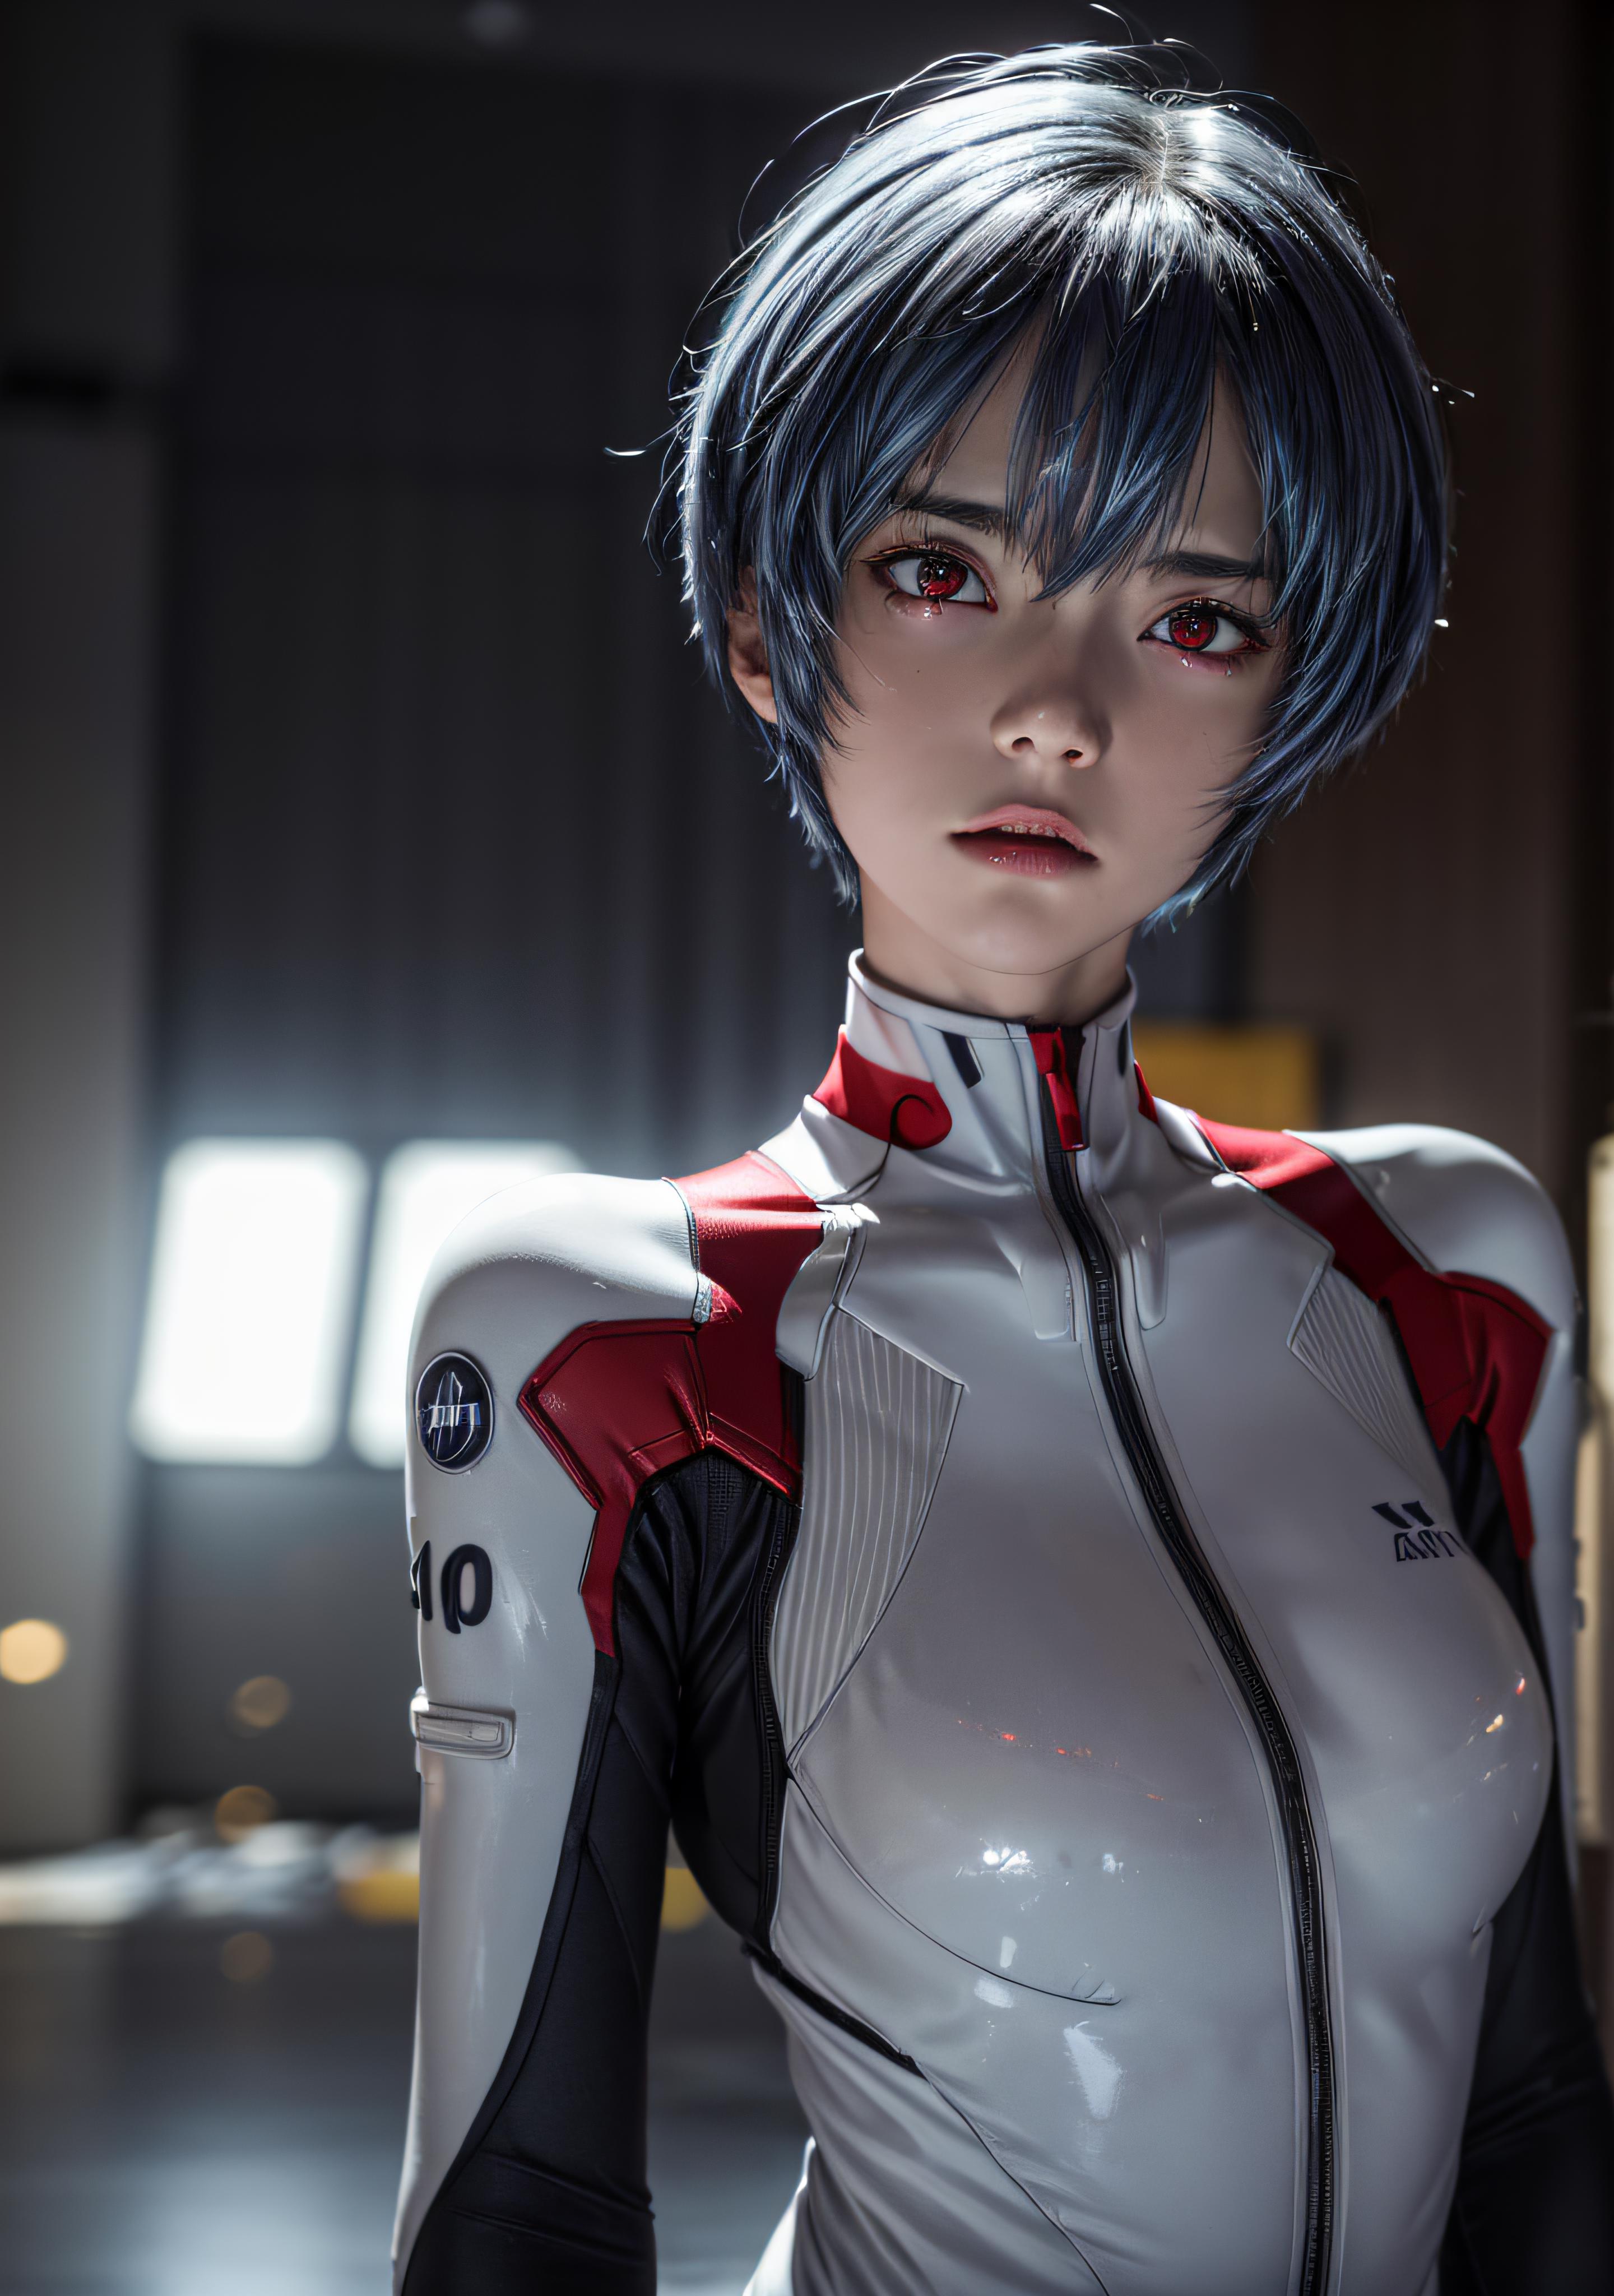 Rei Ayanami (綾波 レイ) - Neon Genesis Evangelion (新世紀エヴァンゲリオン) image by Willians